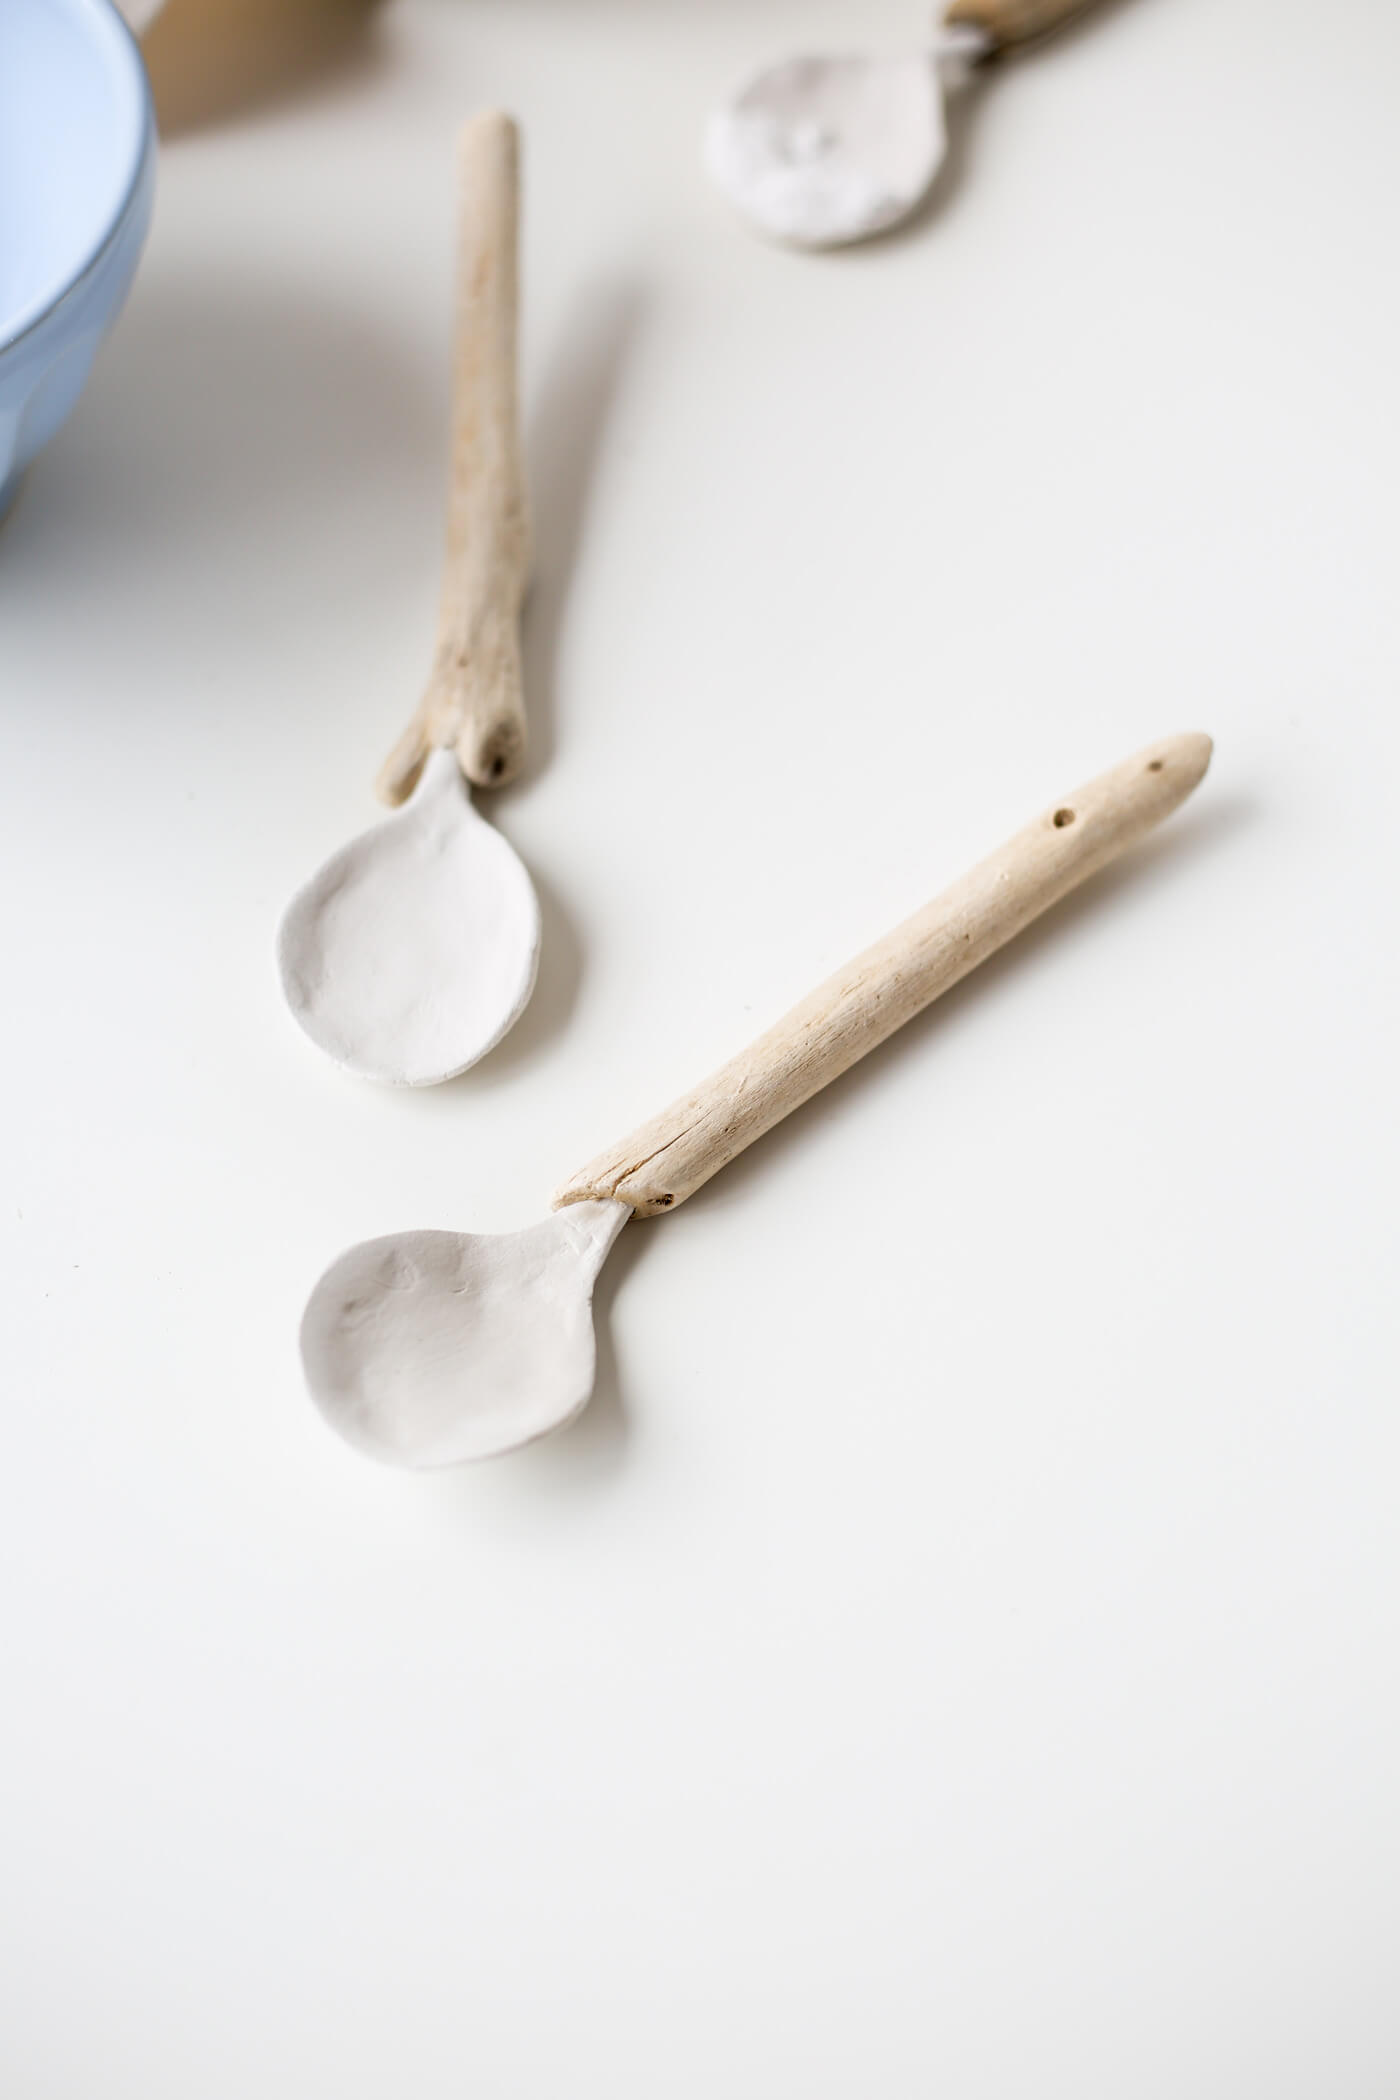 DIY Salt Spoons Using Air Dry Clay and DriftwoodDIY air dry salt spoon ideas